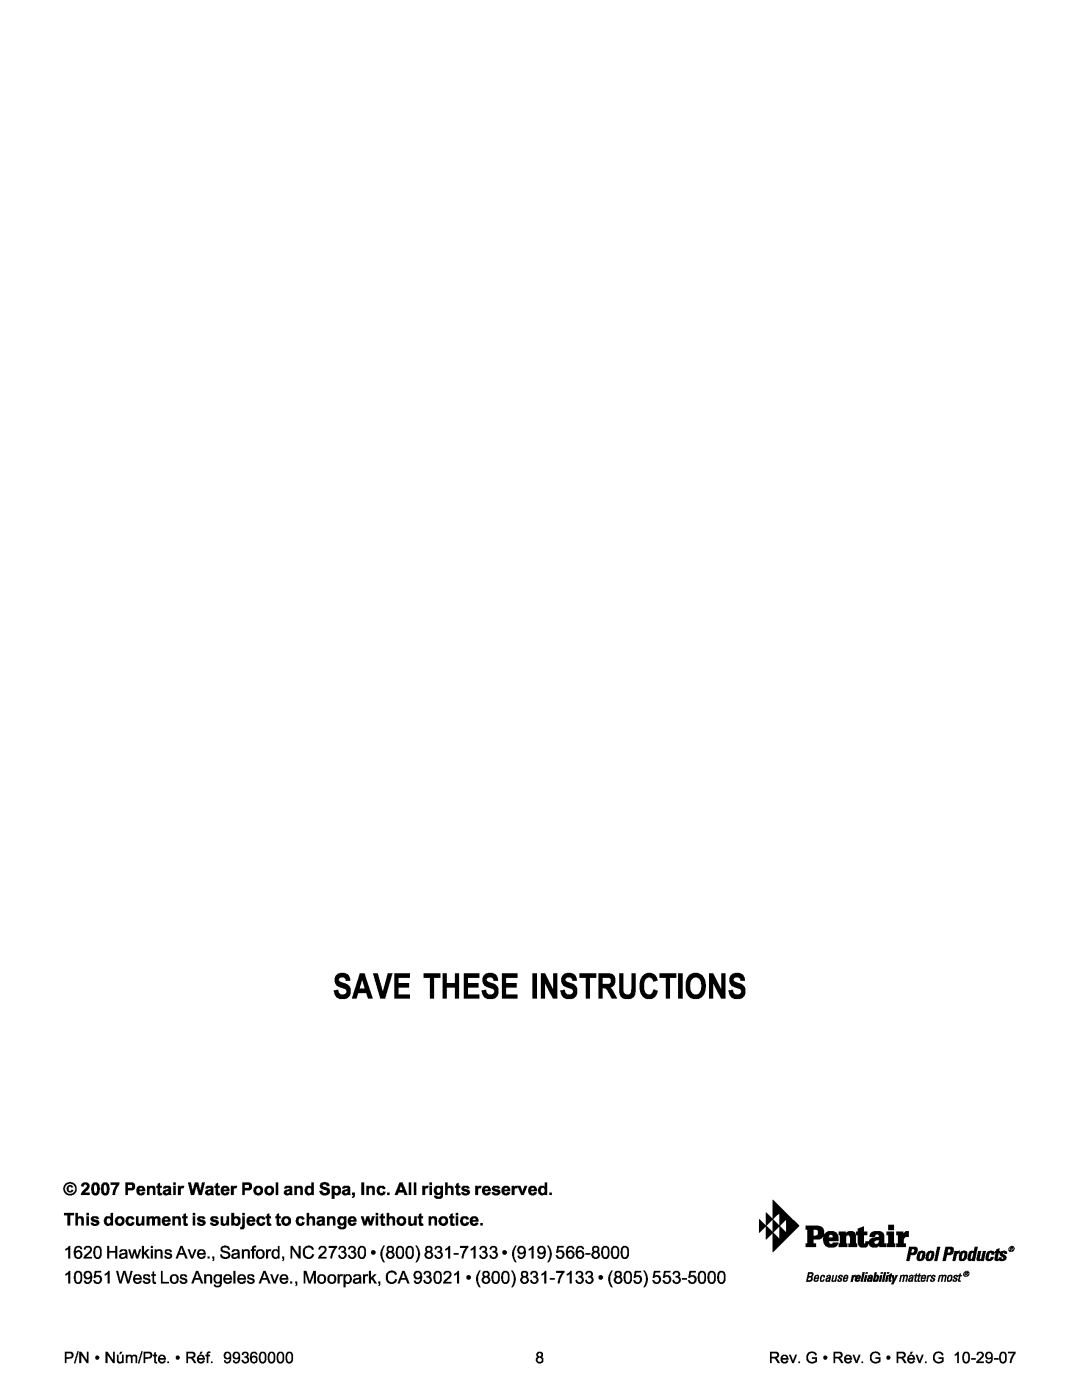 Pentair Amerlite Save These Instructions, Hawkins Ave., Sanford, NC 27330 800 831-7133, P/N Núm/Pte. Réf 